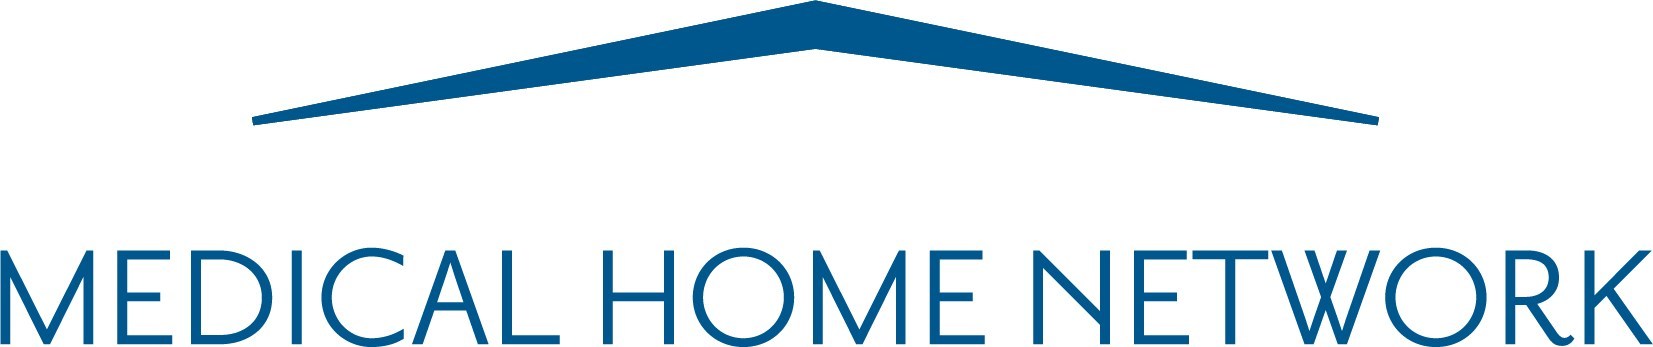 Medical Home Network (PRNewsfoto/Medical Home Network)